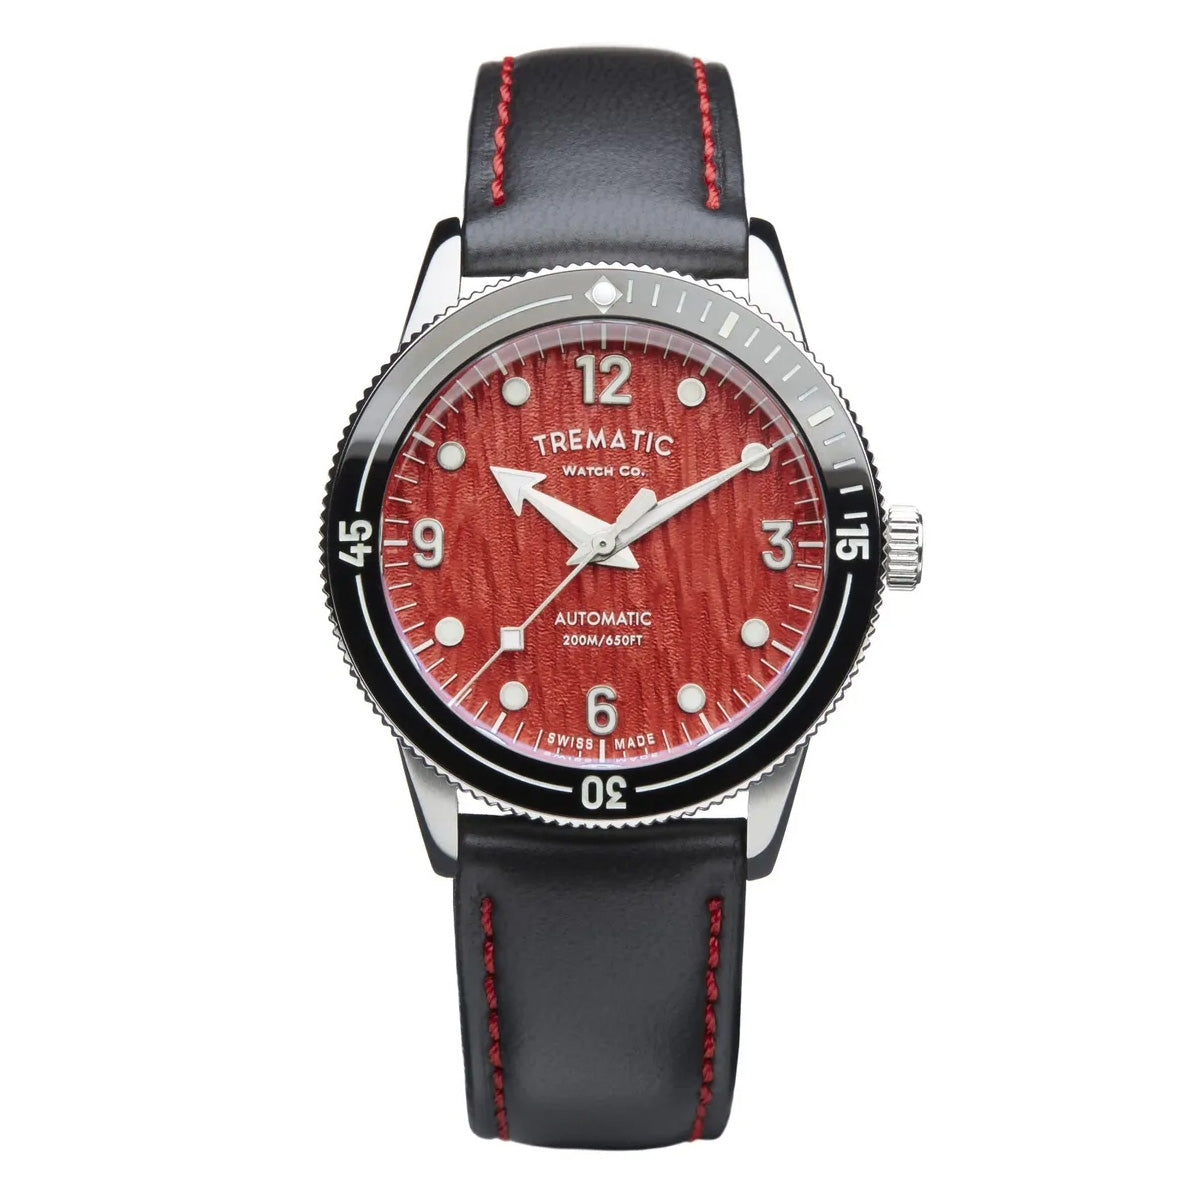 Trematic Men's Watch AC 14 Crimson Red 1414121